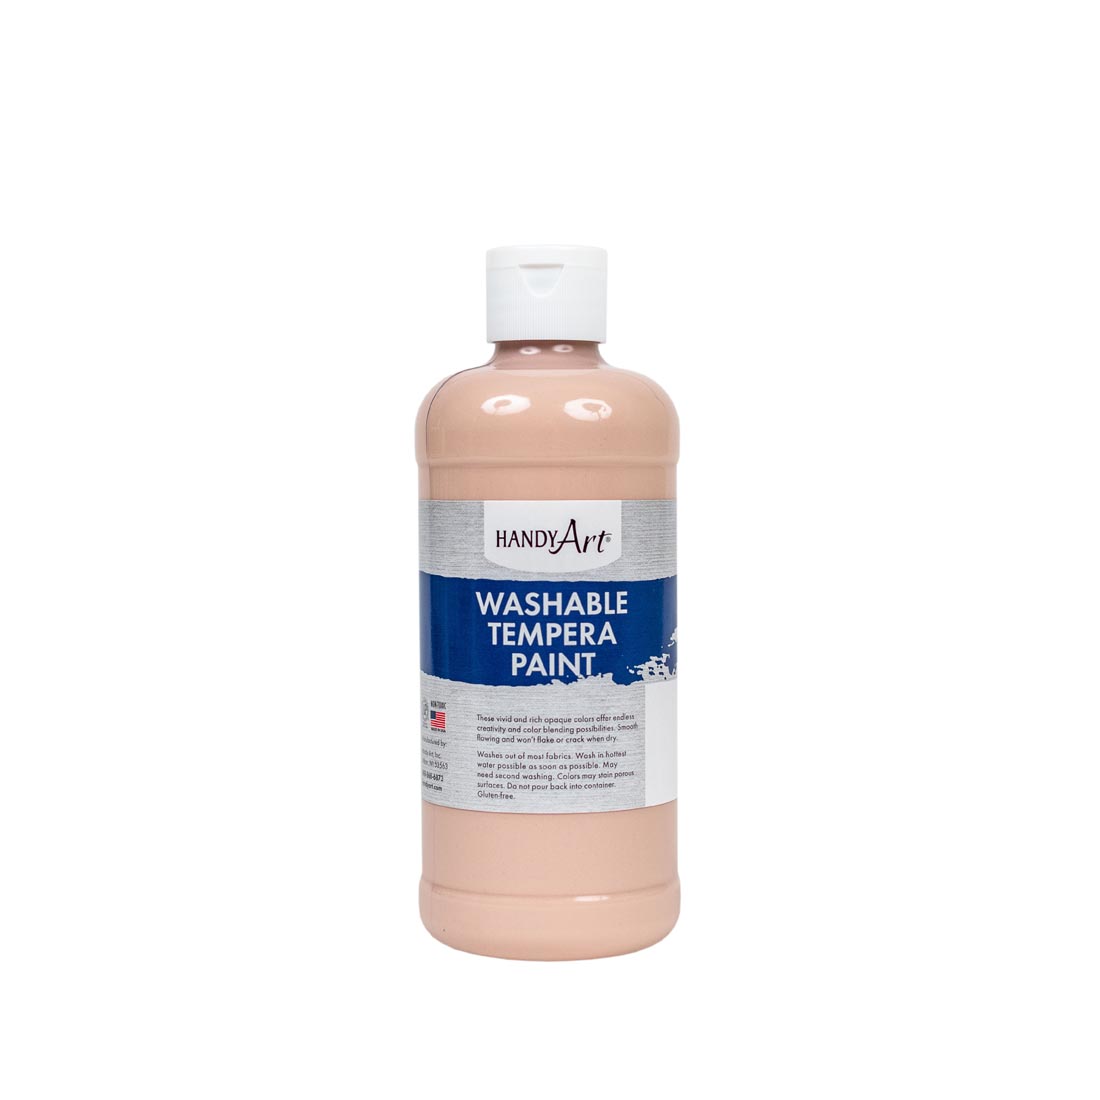 Pint bottle of Peach Handy Art Washable Tempera Paint